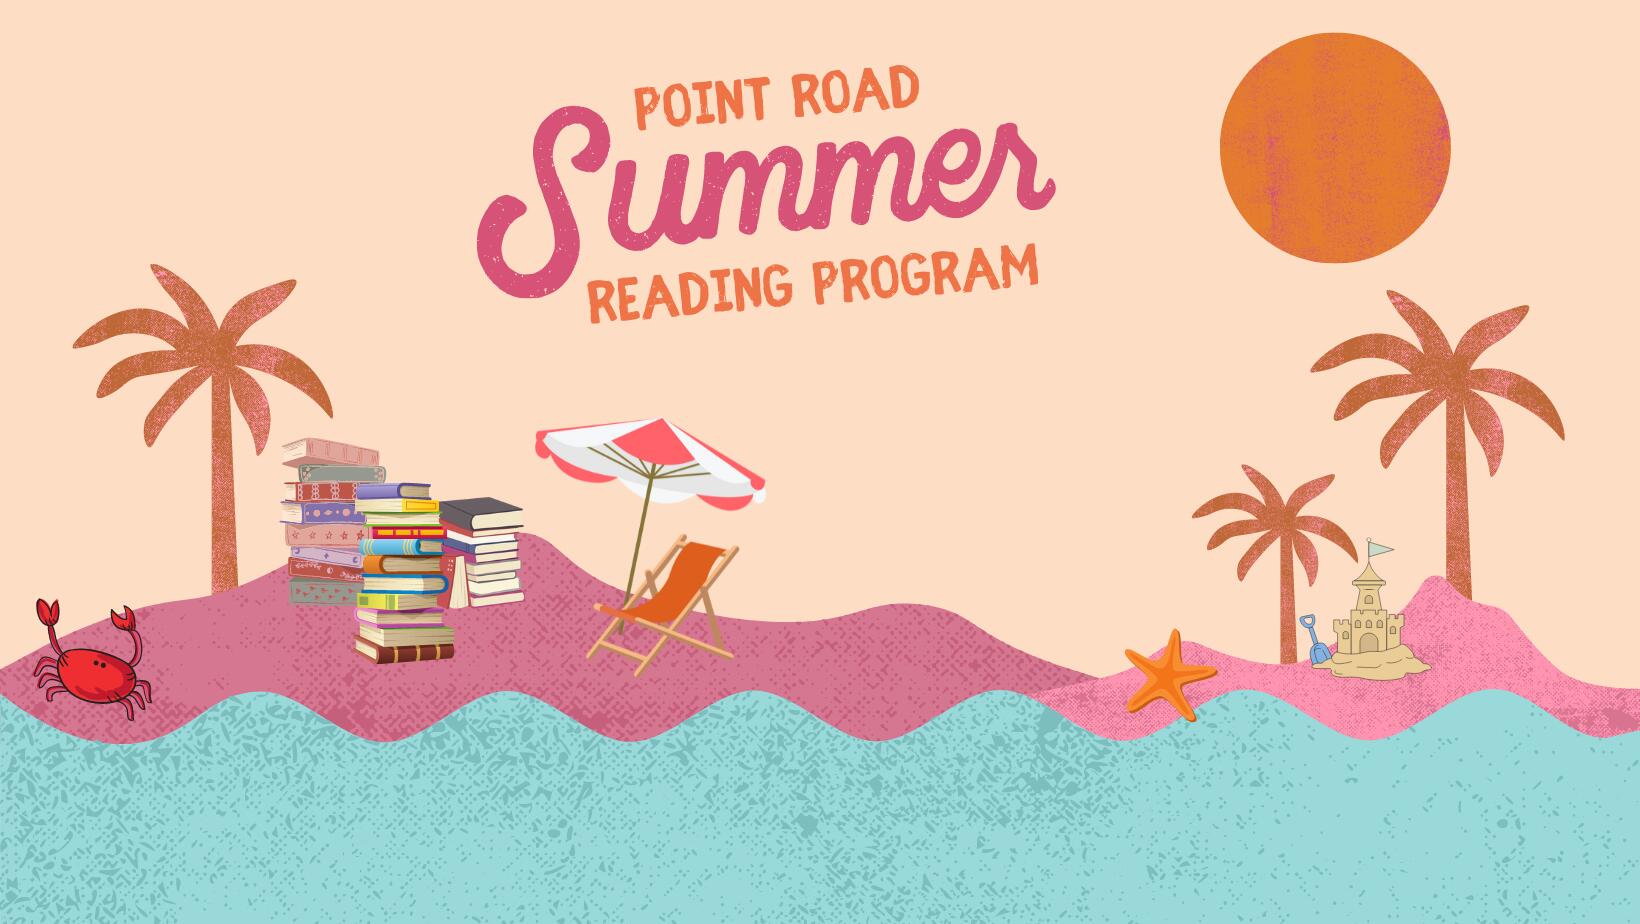 Point Road Summer Reading Program post card